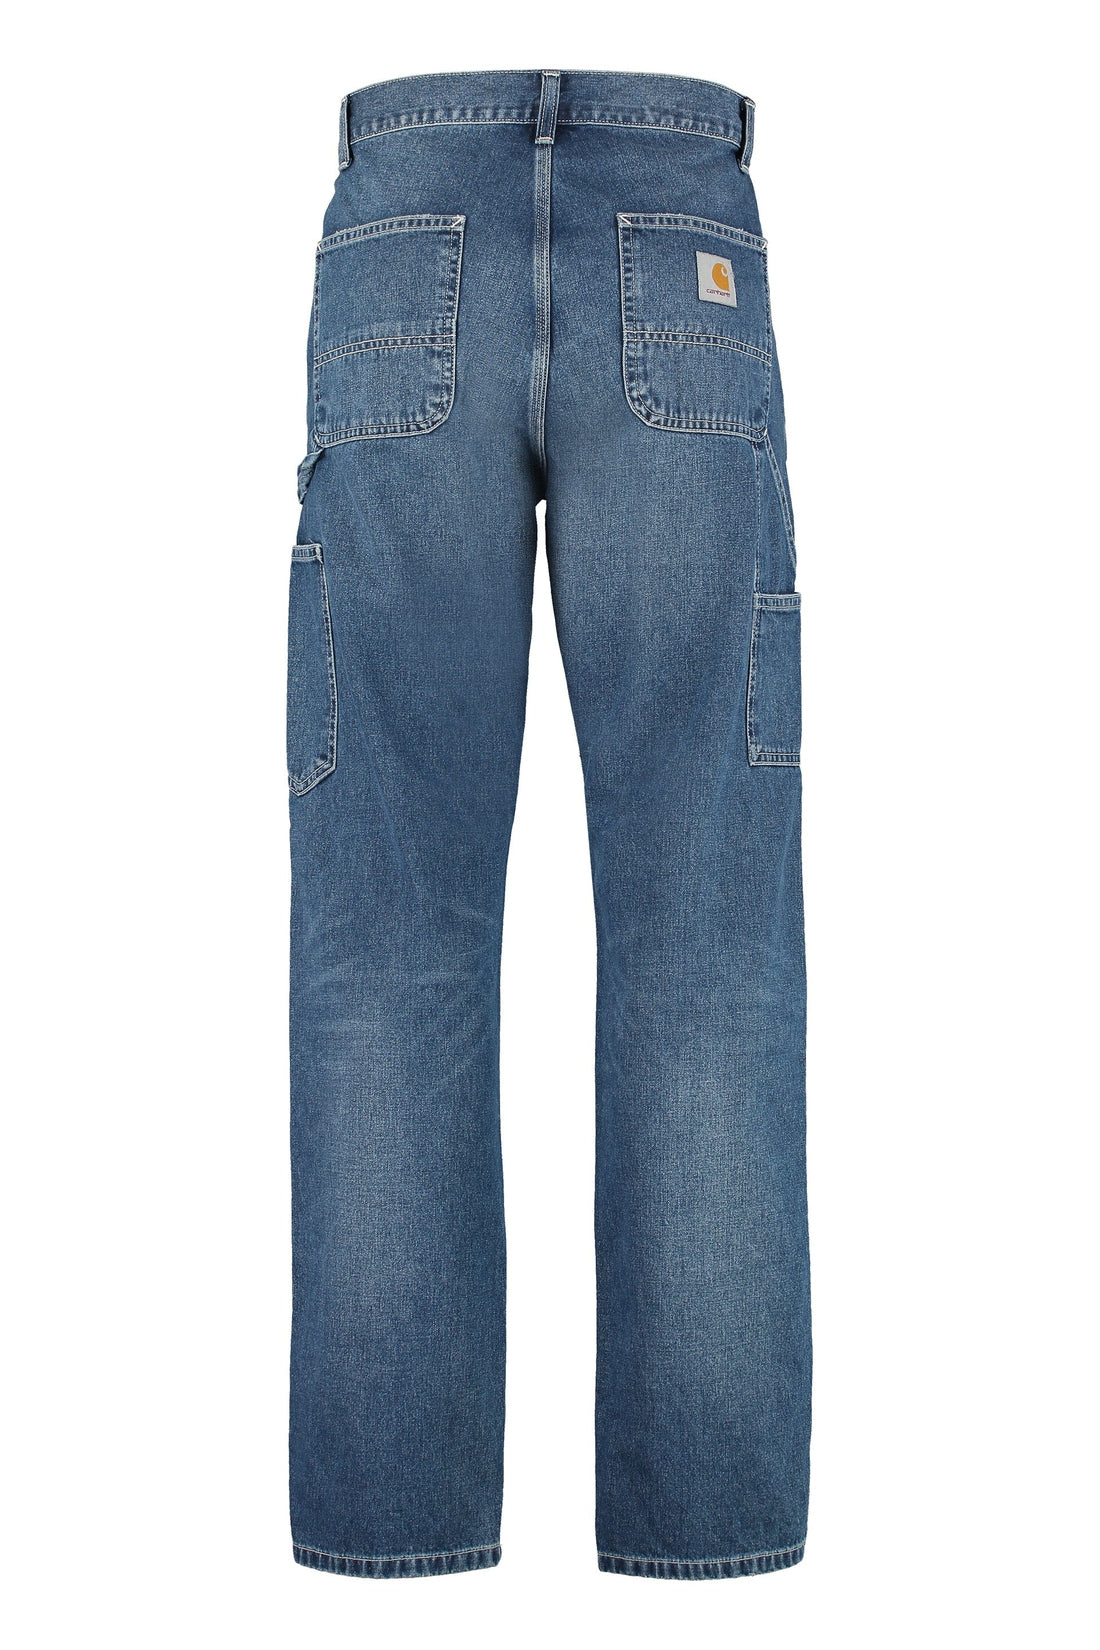 Carhartt-OUTLET-SALE-Straight leg jeans-ARCHIVIST